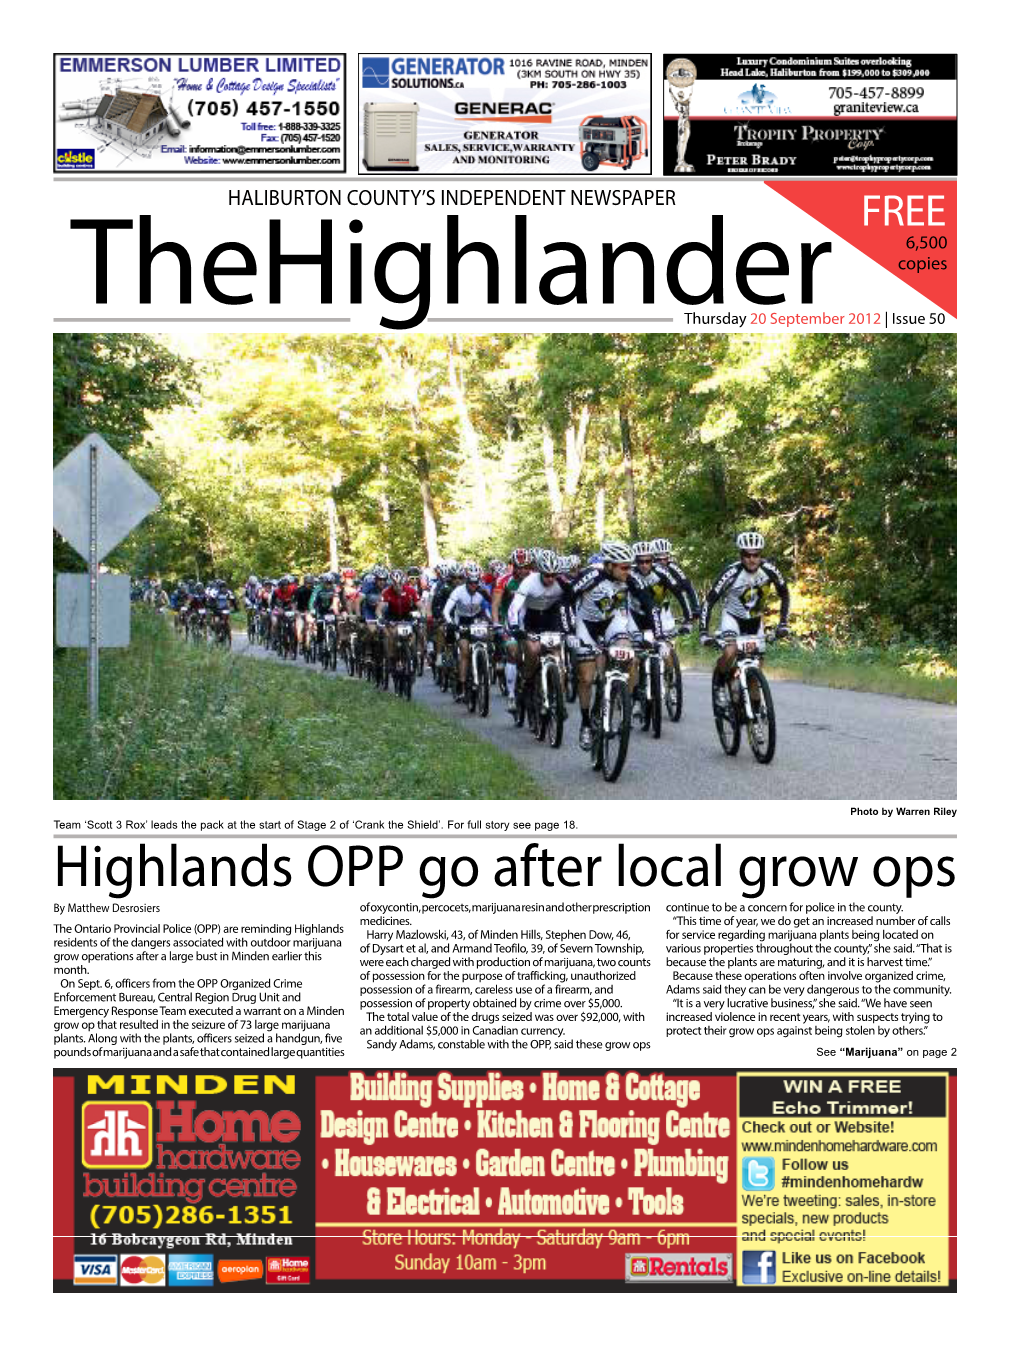 Highlands OPP Go After Local Grow